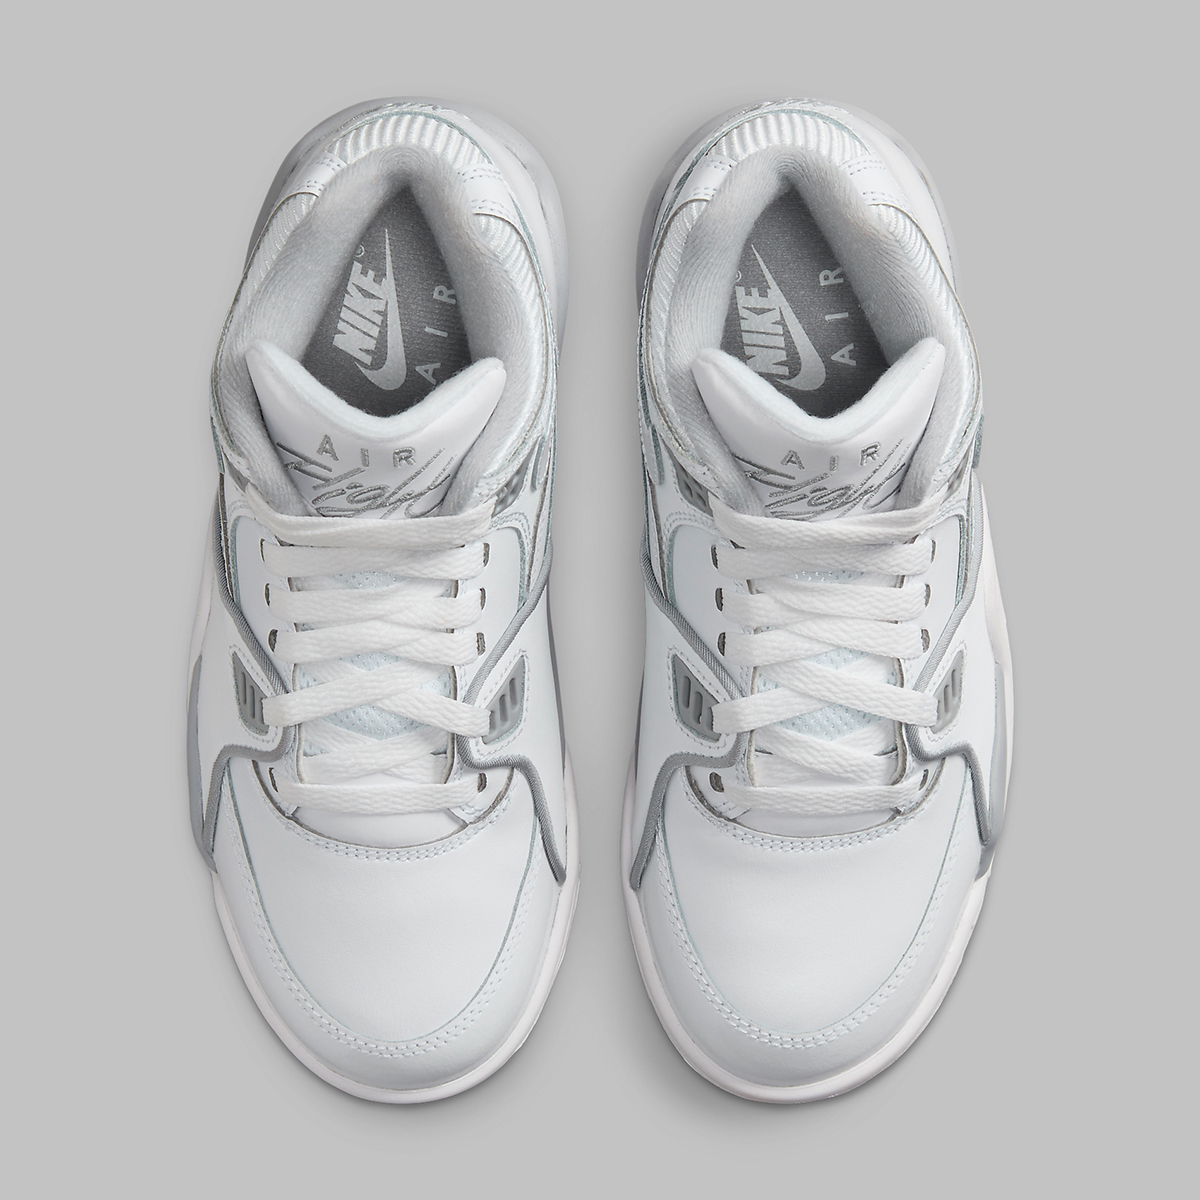 Nike nike boot for kids real people free full version Grey White Hf0406 100 3